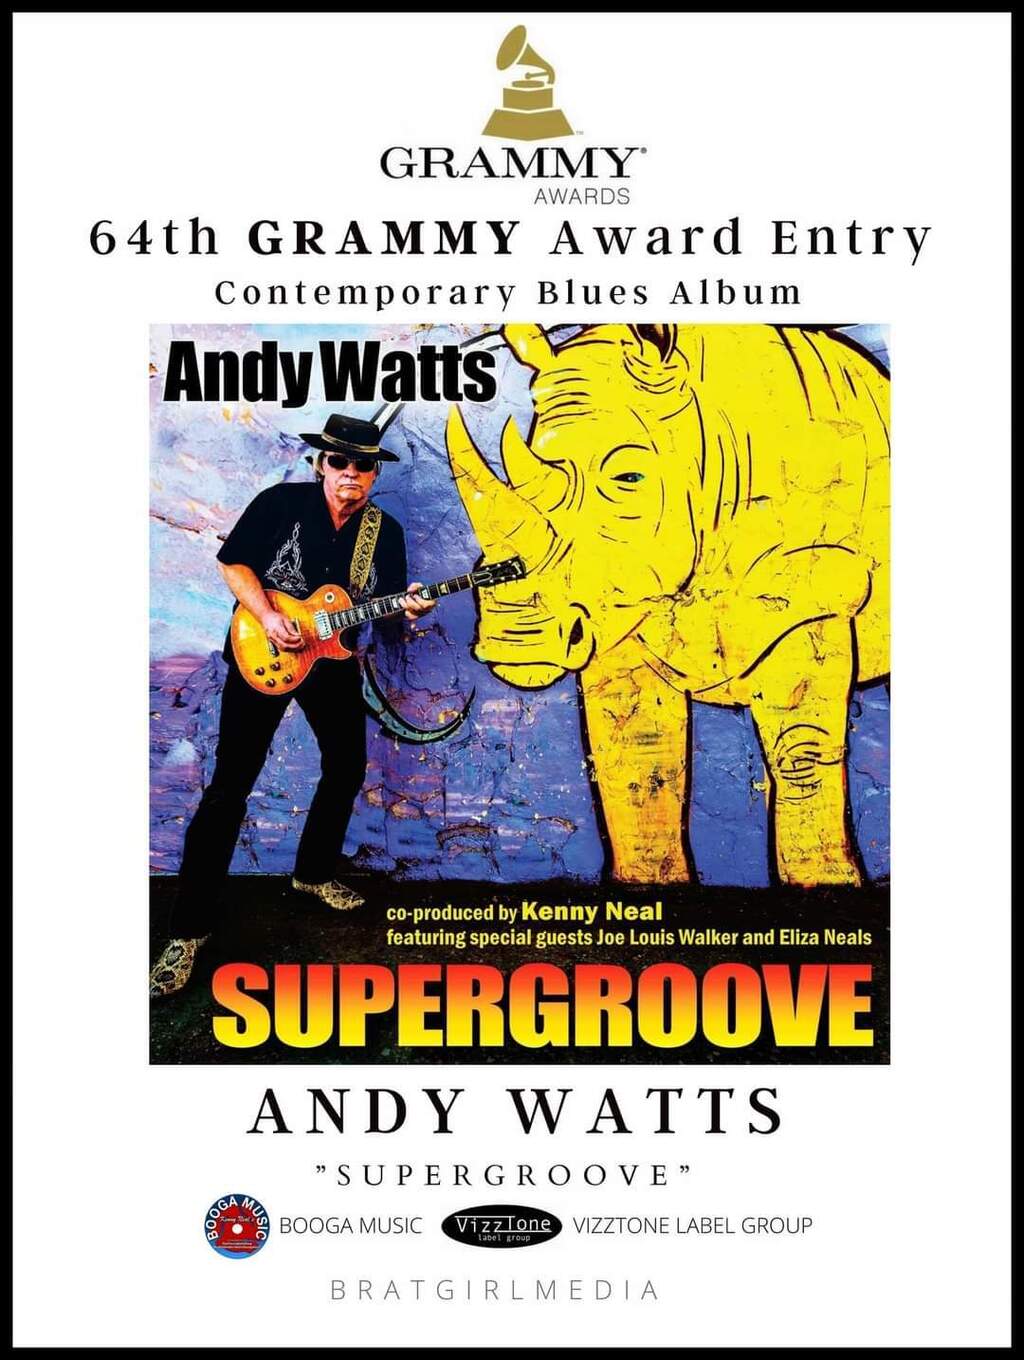 Обложка альбома Энди Уоттса "SuperGroove"